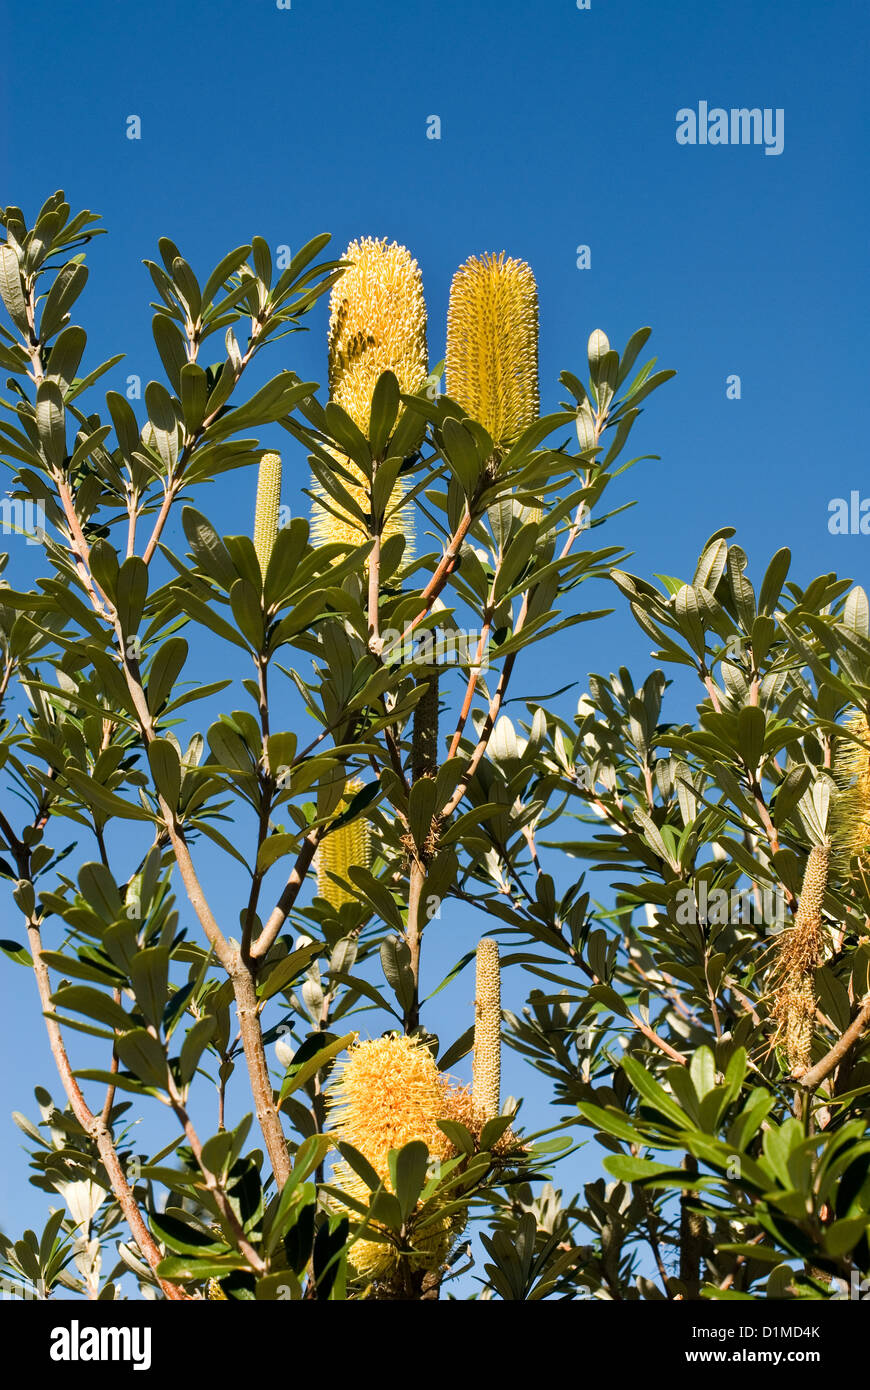 An Australian native bush - Hakea, with its unusual flowers Stock Photo